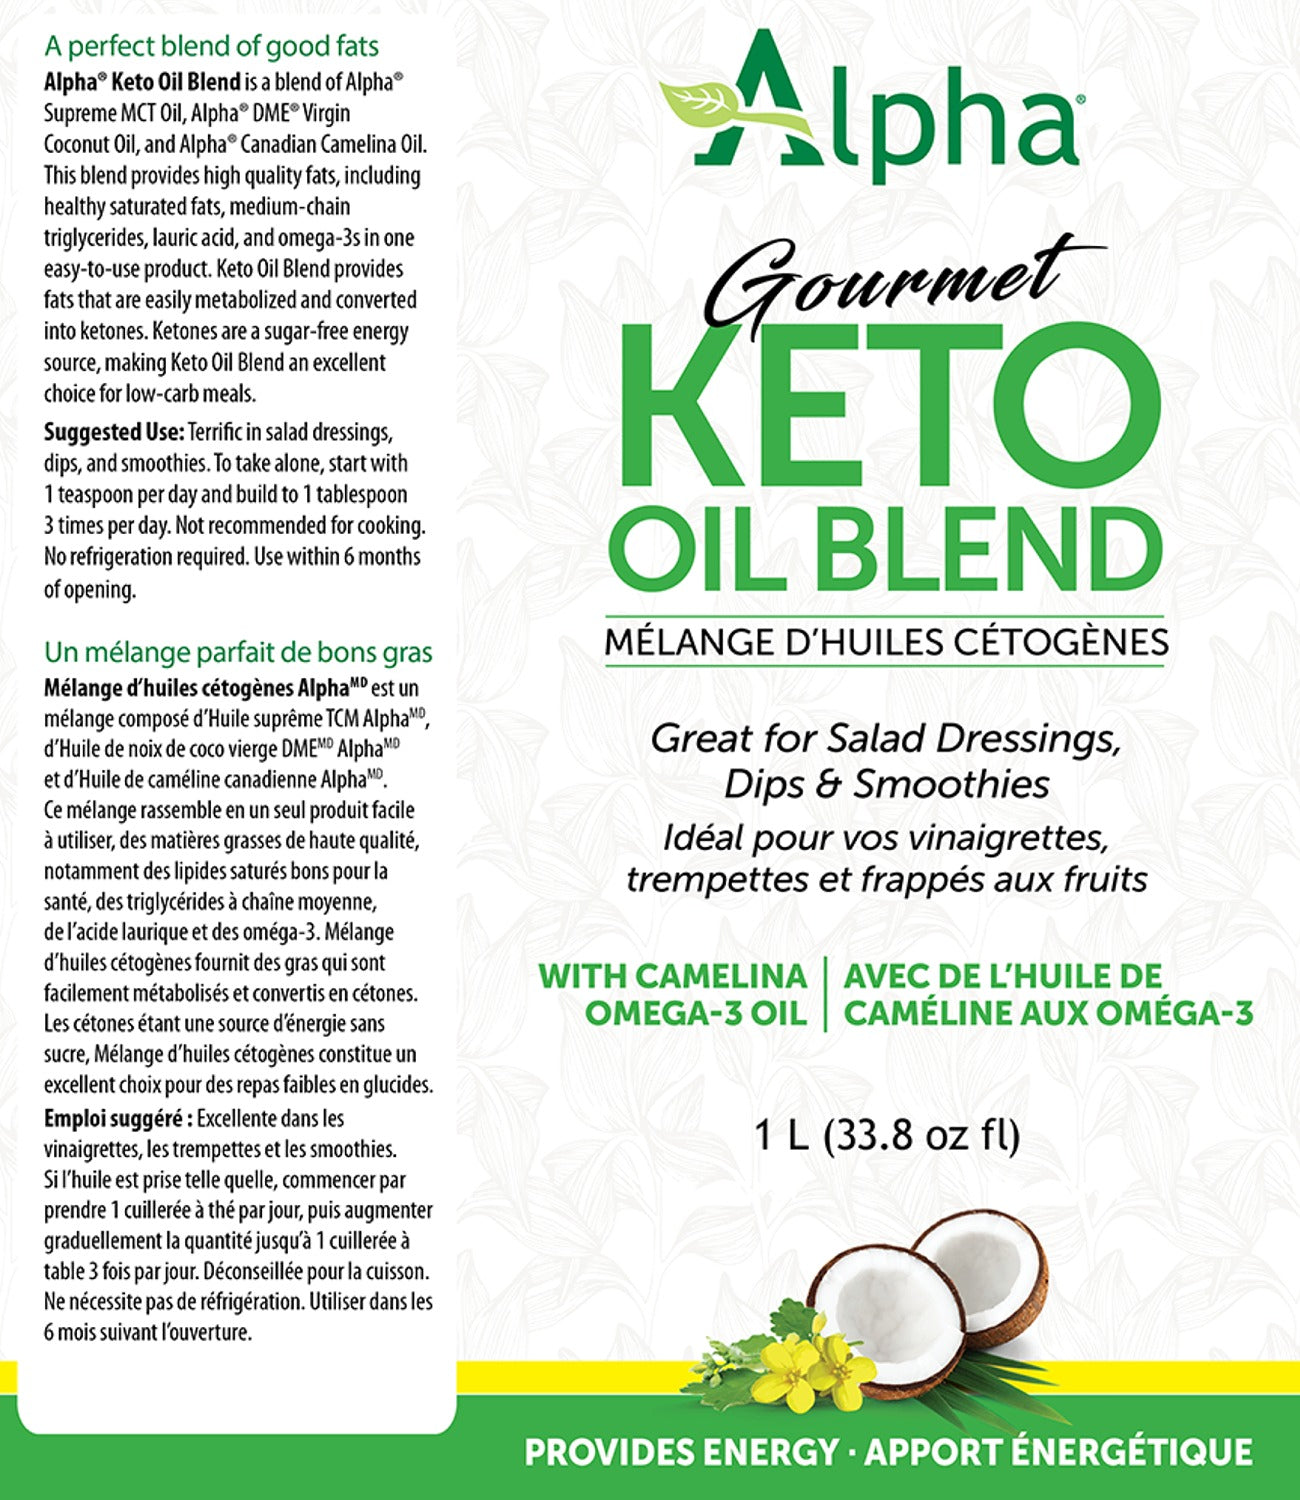 ALPHA HEALTH Keto Oil Blend (1 L)